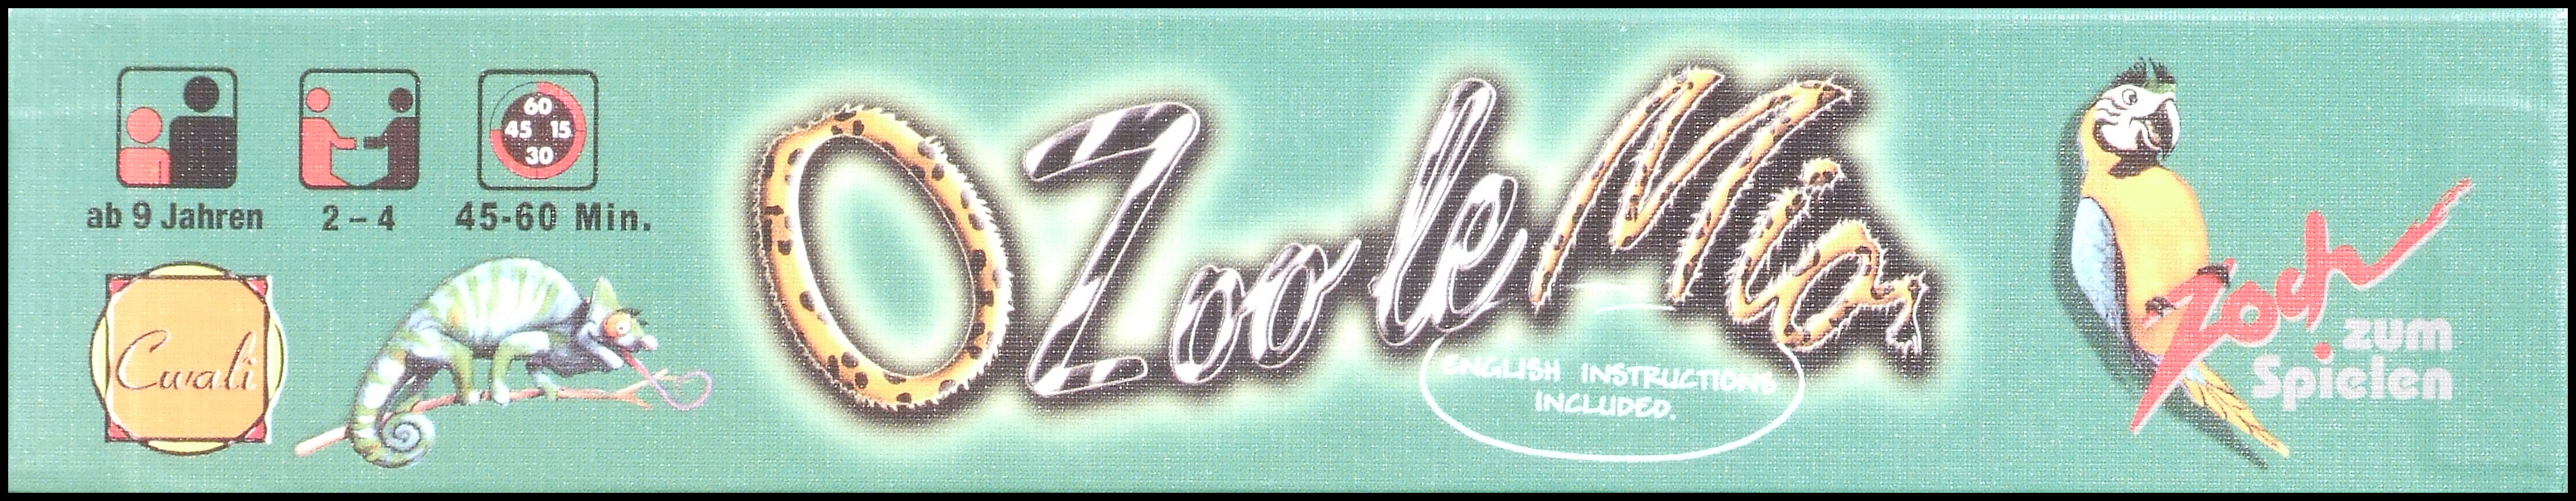 O Zoo Le Mio - Outer Box Side 1